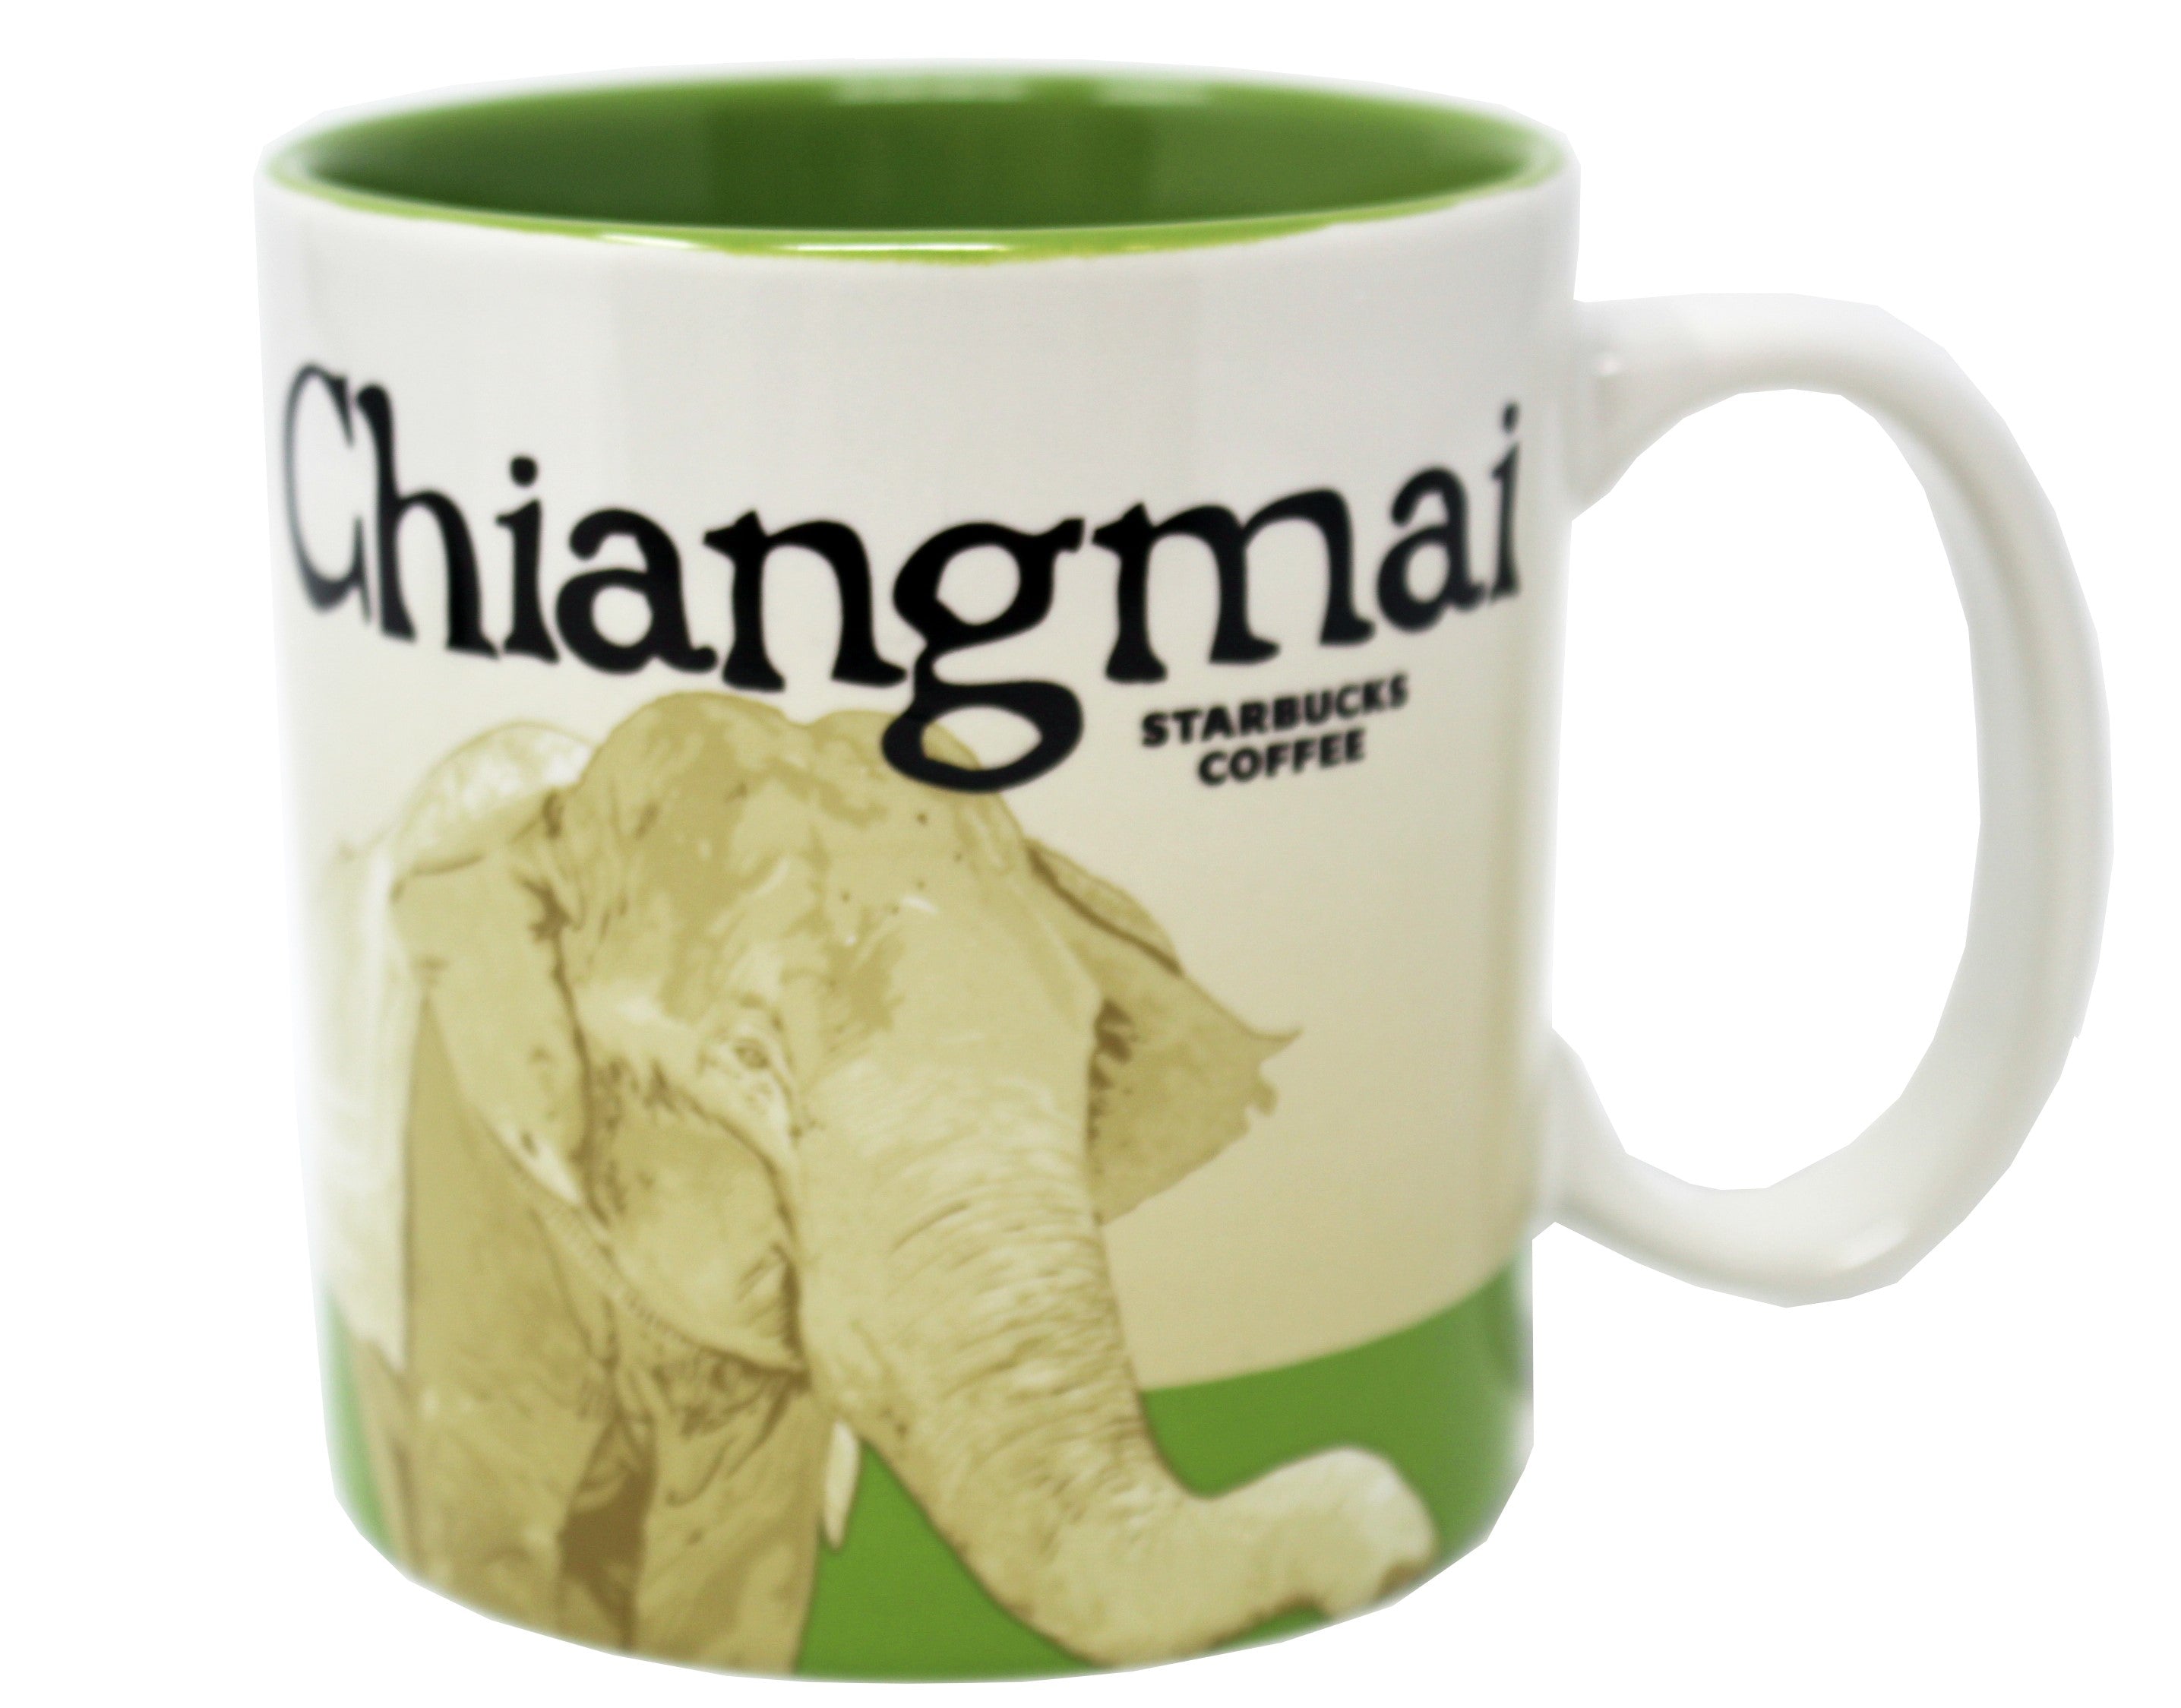 Starbucks Chiangmai Global icon Mug, 16 Oz